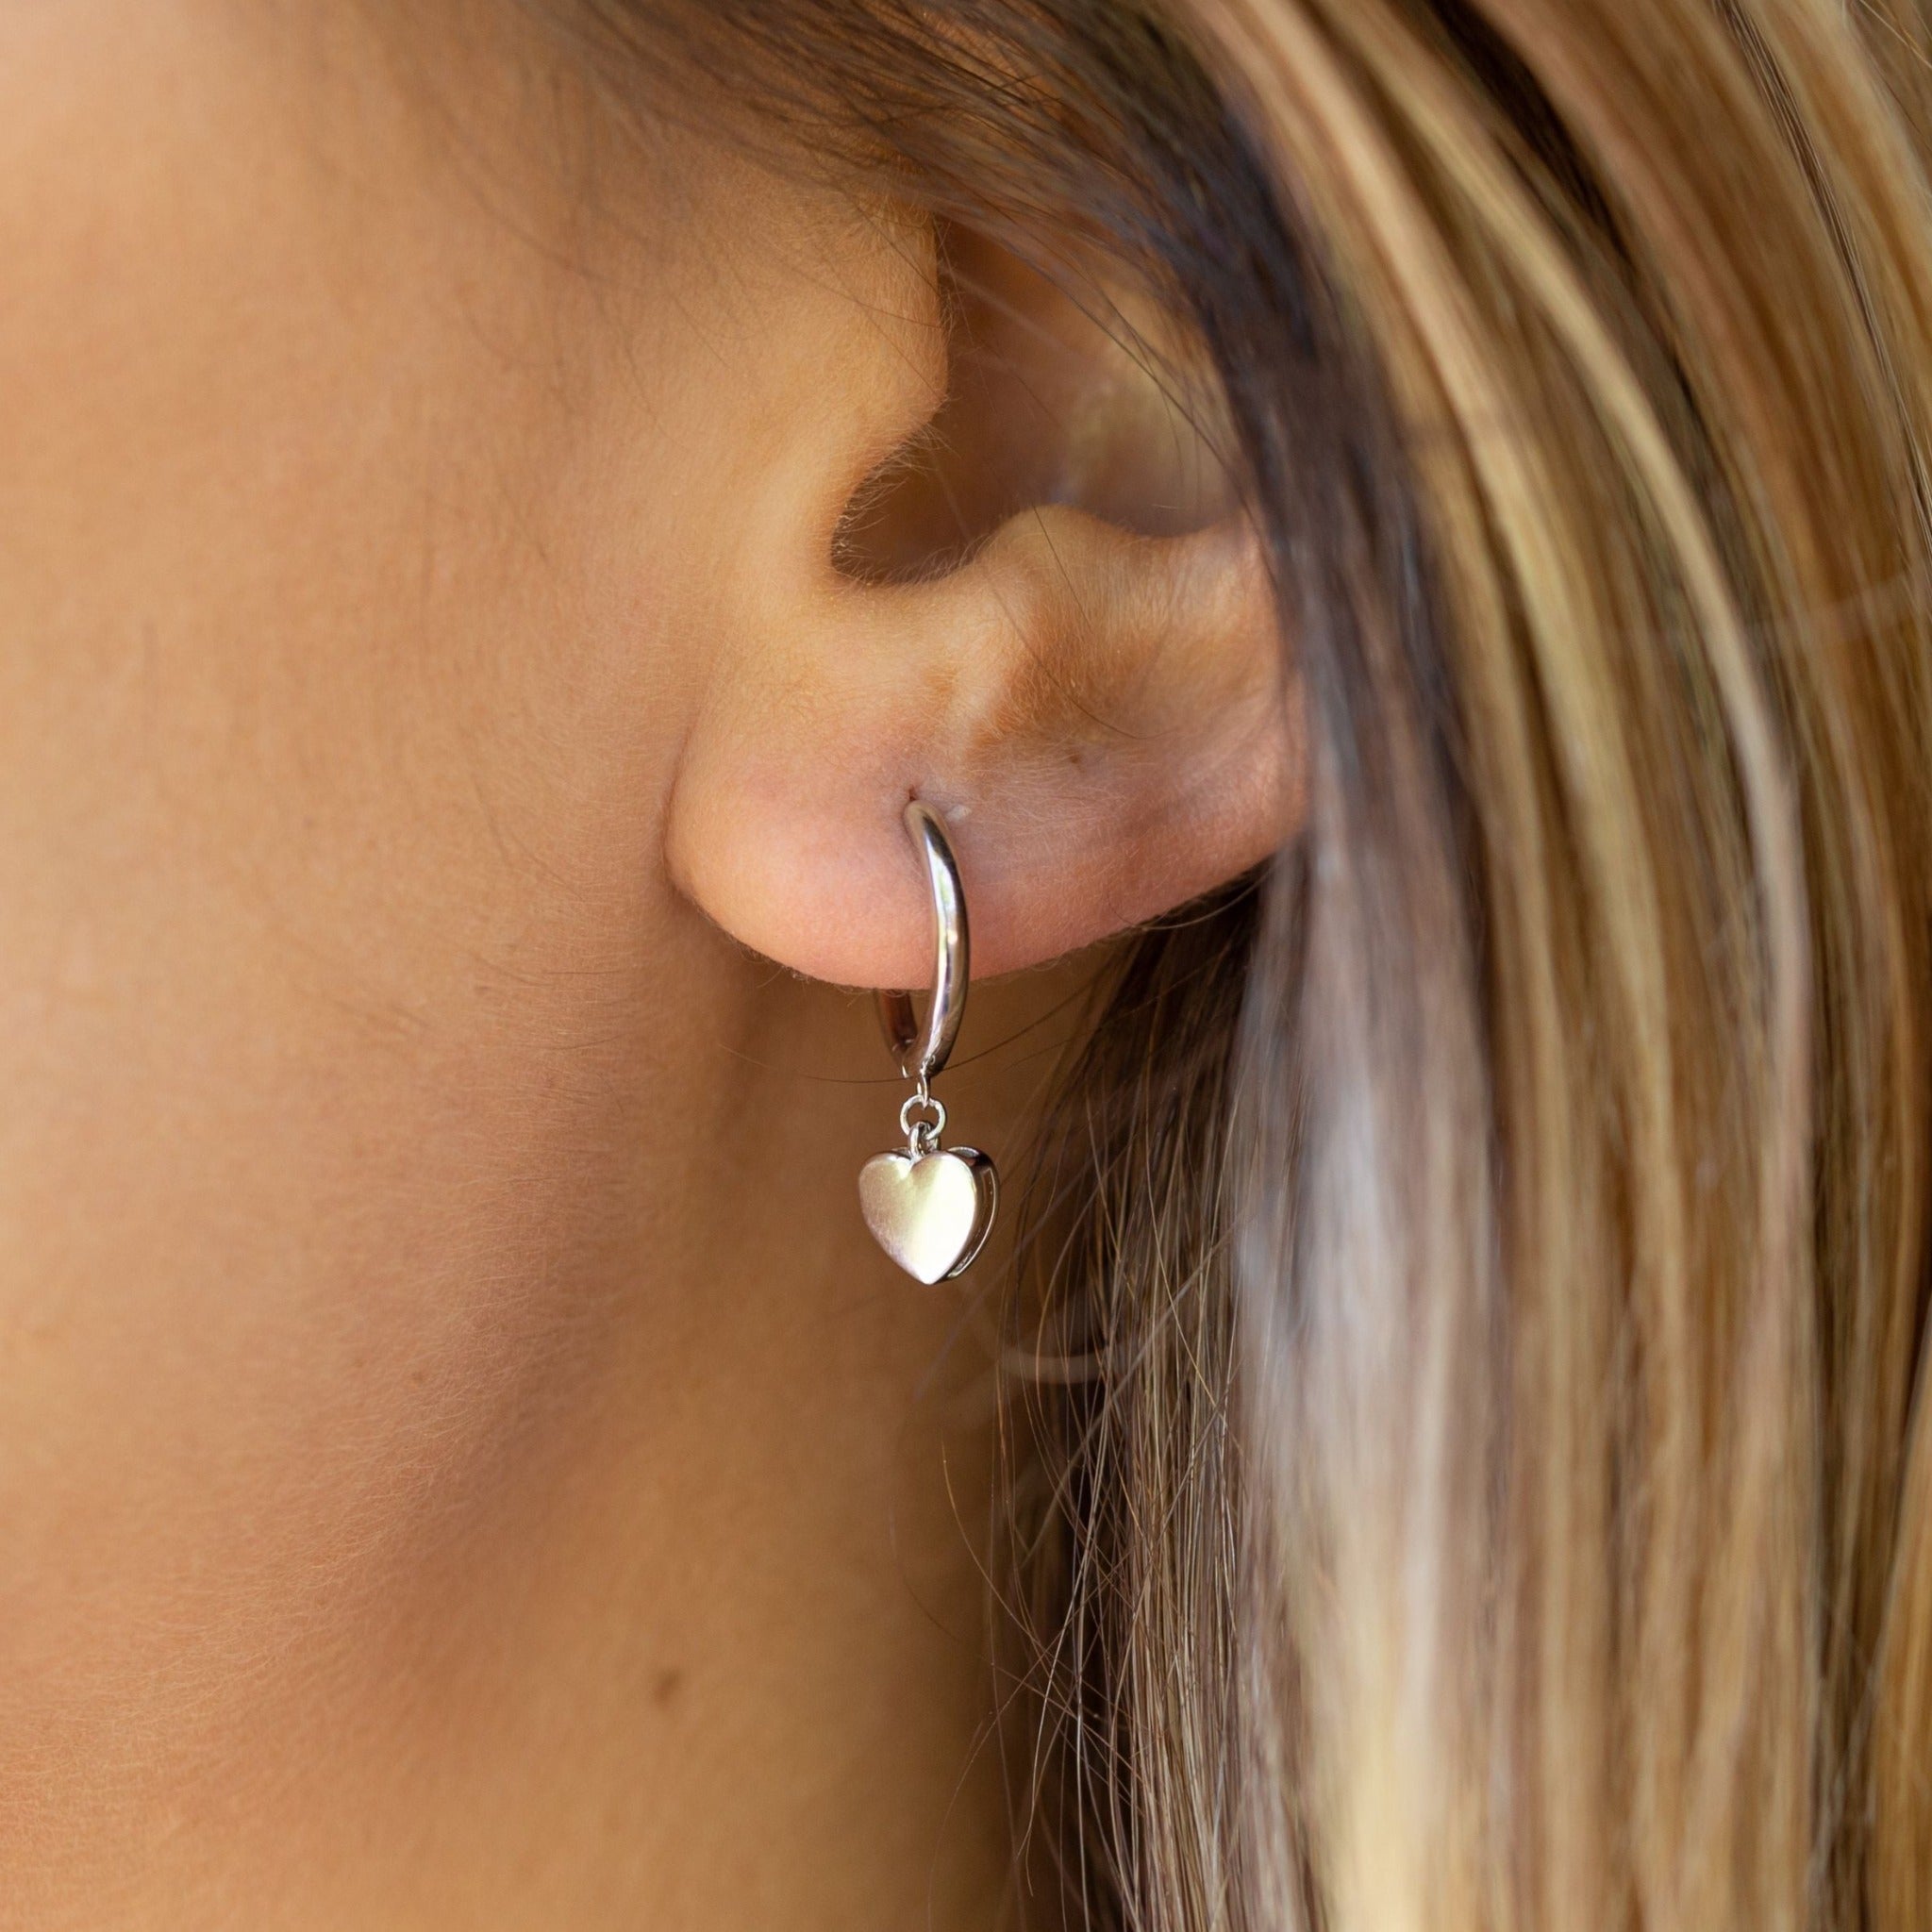 1 Inch Sterling Silver Hoop Earrings / Gift for Her / Jewelry Sale / Medium Silver  Hoops / Hammered Hoops / Basic Hoops / Minimalist Earring - Etsy